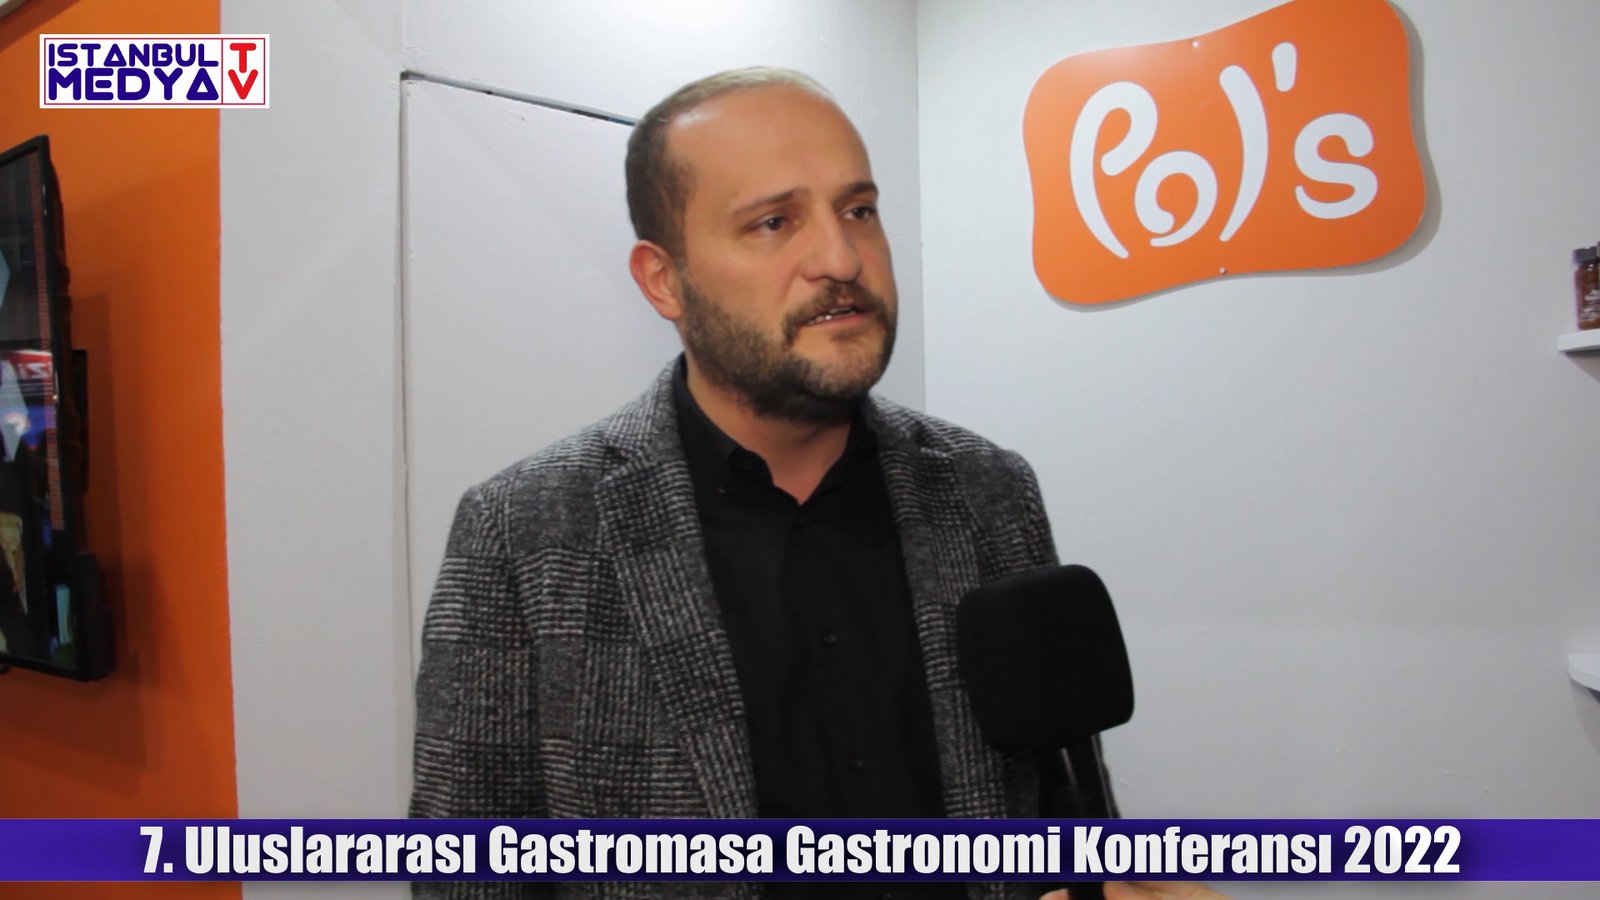 Ali POLAT Pol’s CEO / 7. Uluslararası Gastromasa Gastronomi Konferansı